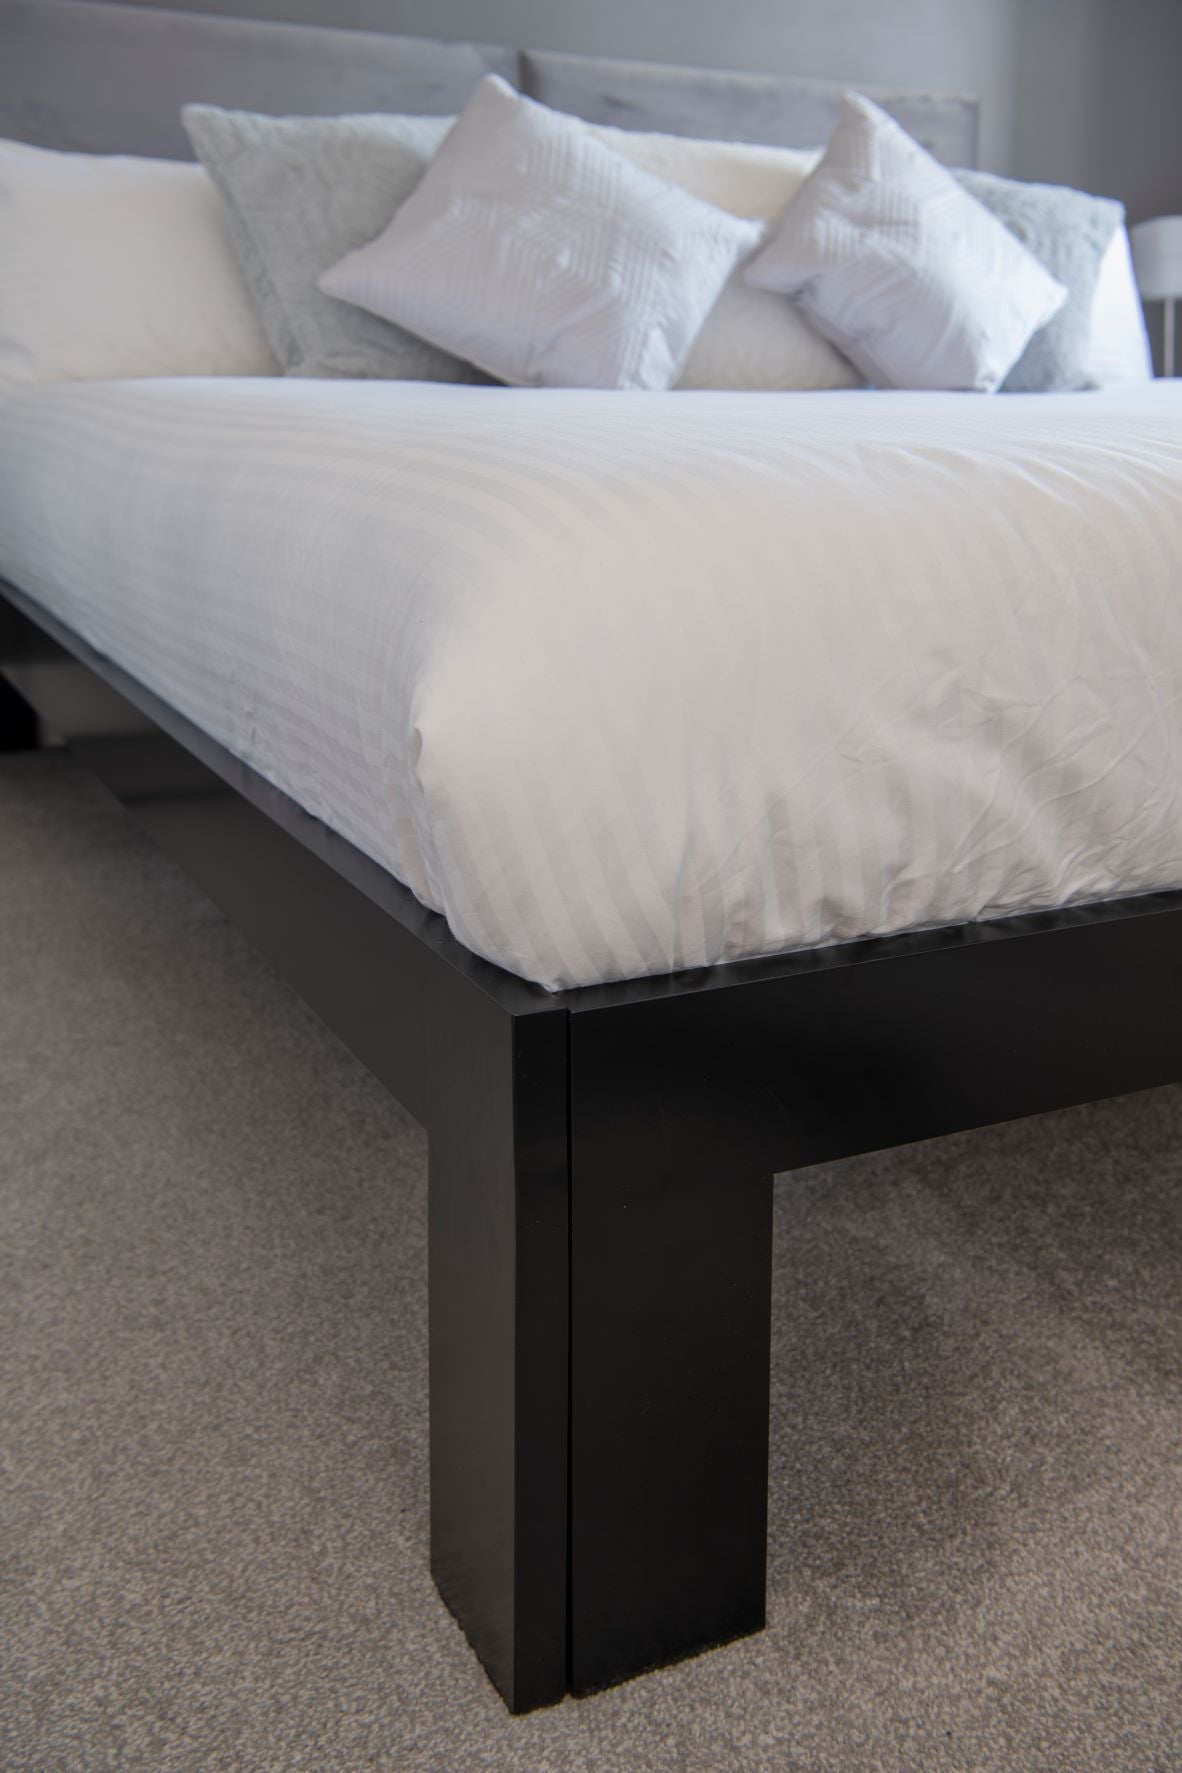 Aluminium Metal King Size Bed Frame - RESS Furniture Ltd. Frame Leg